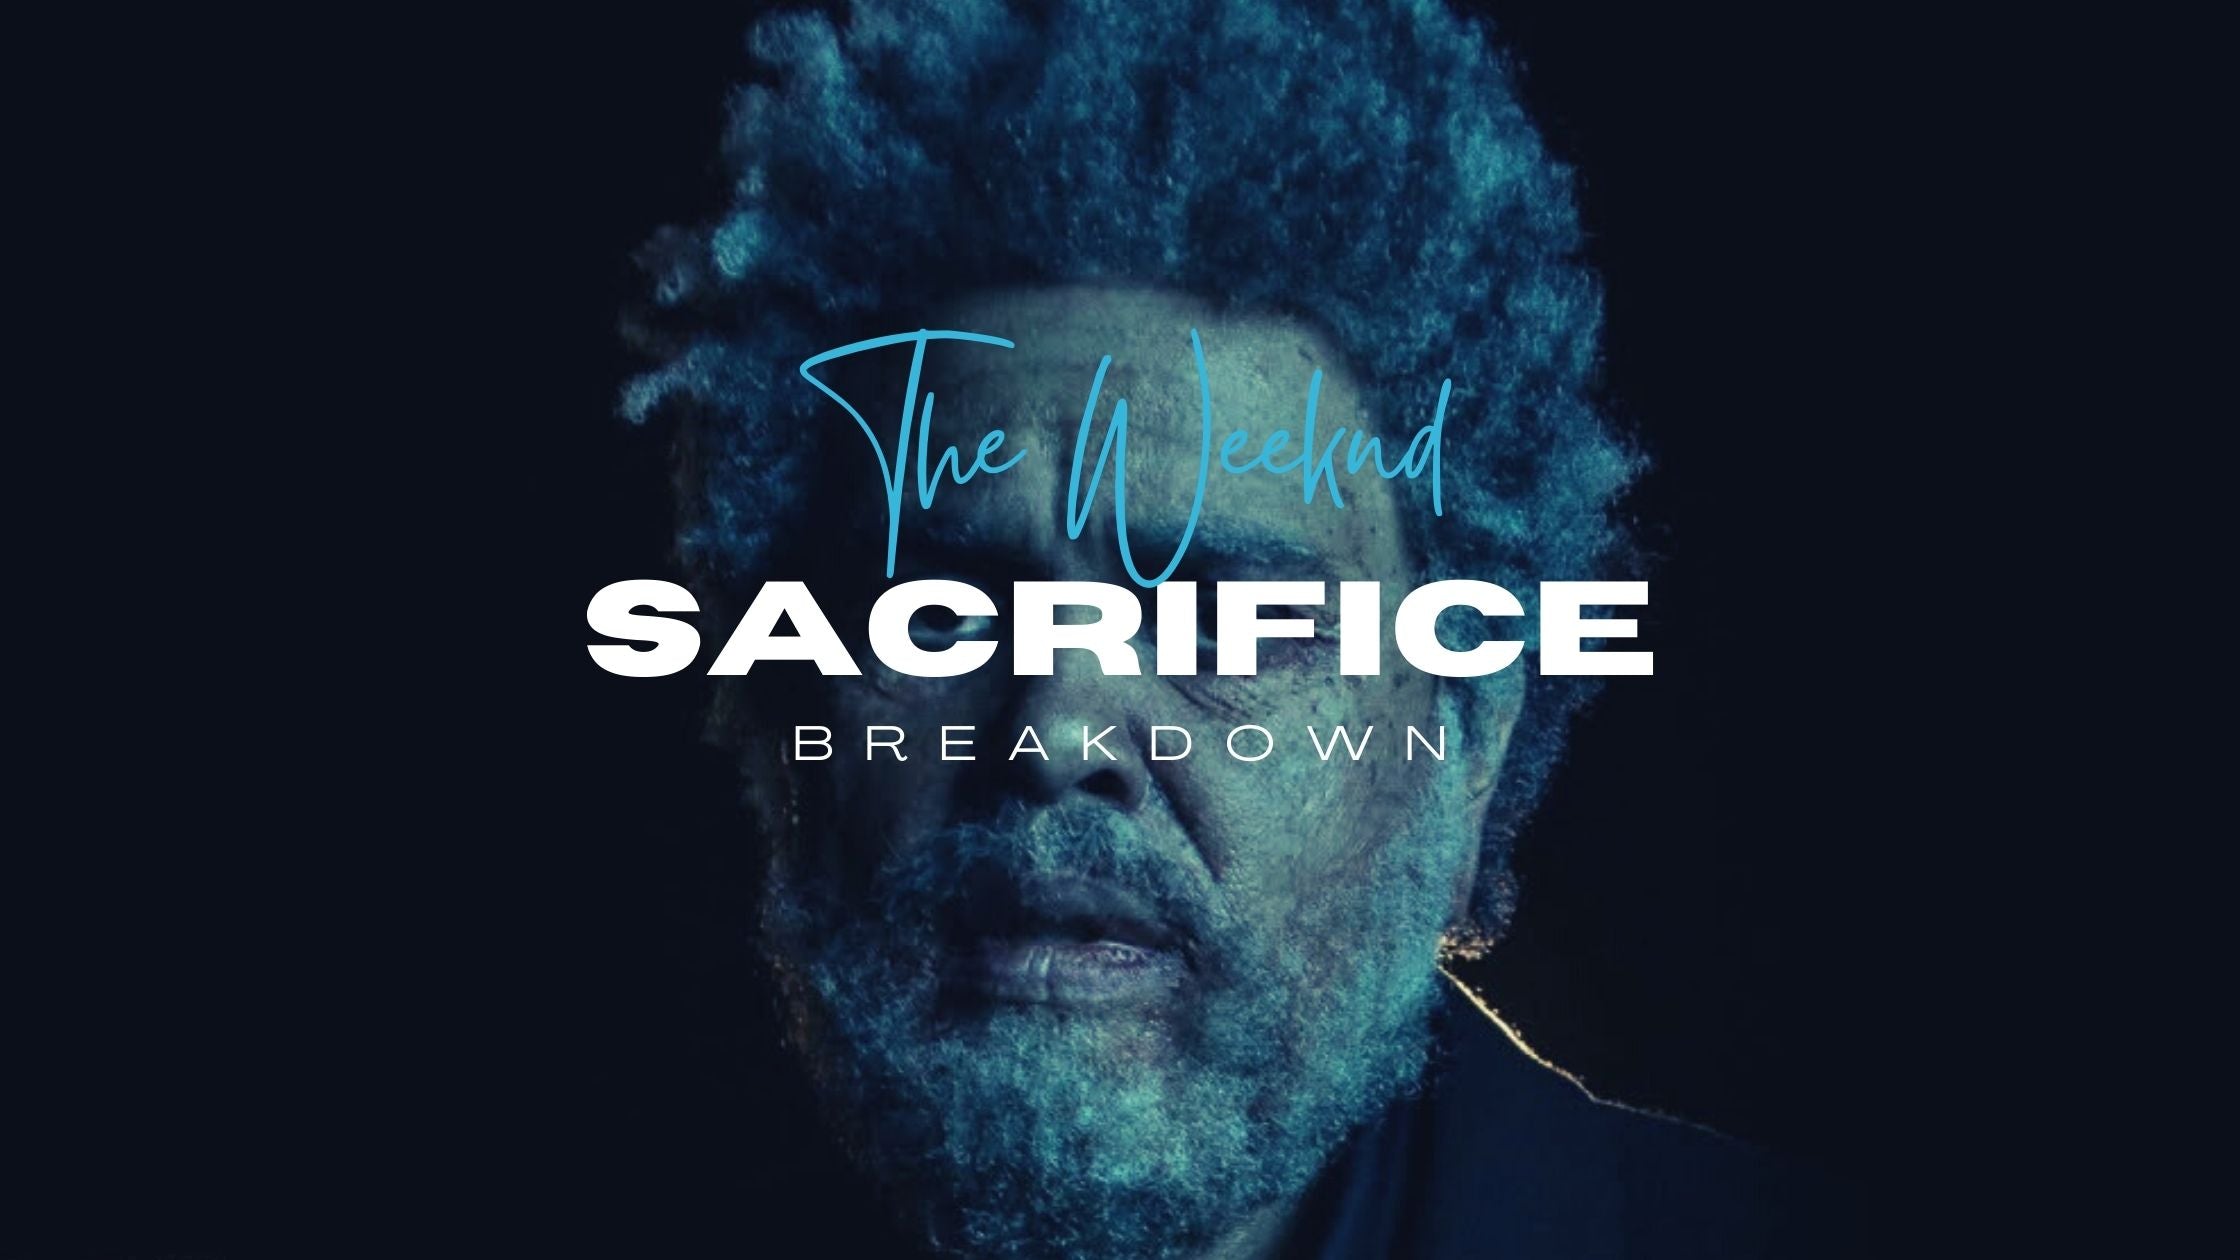 The Weeknd - Sacrifice tradução (PT/BR) 